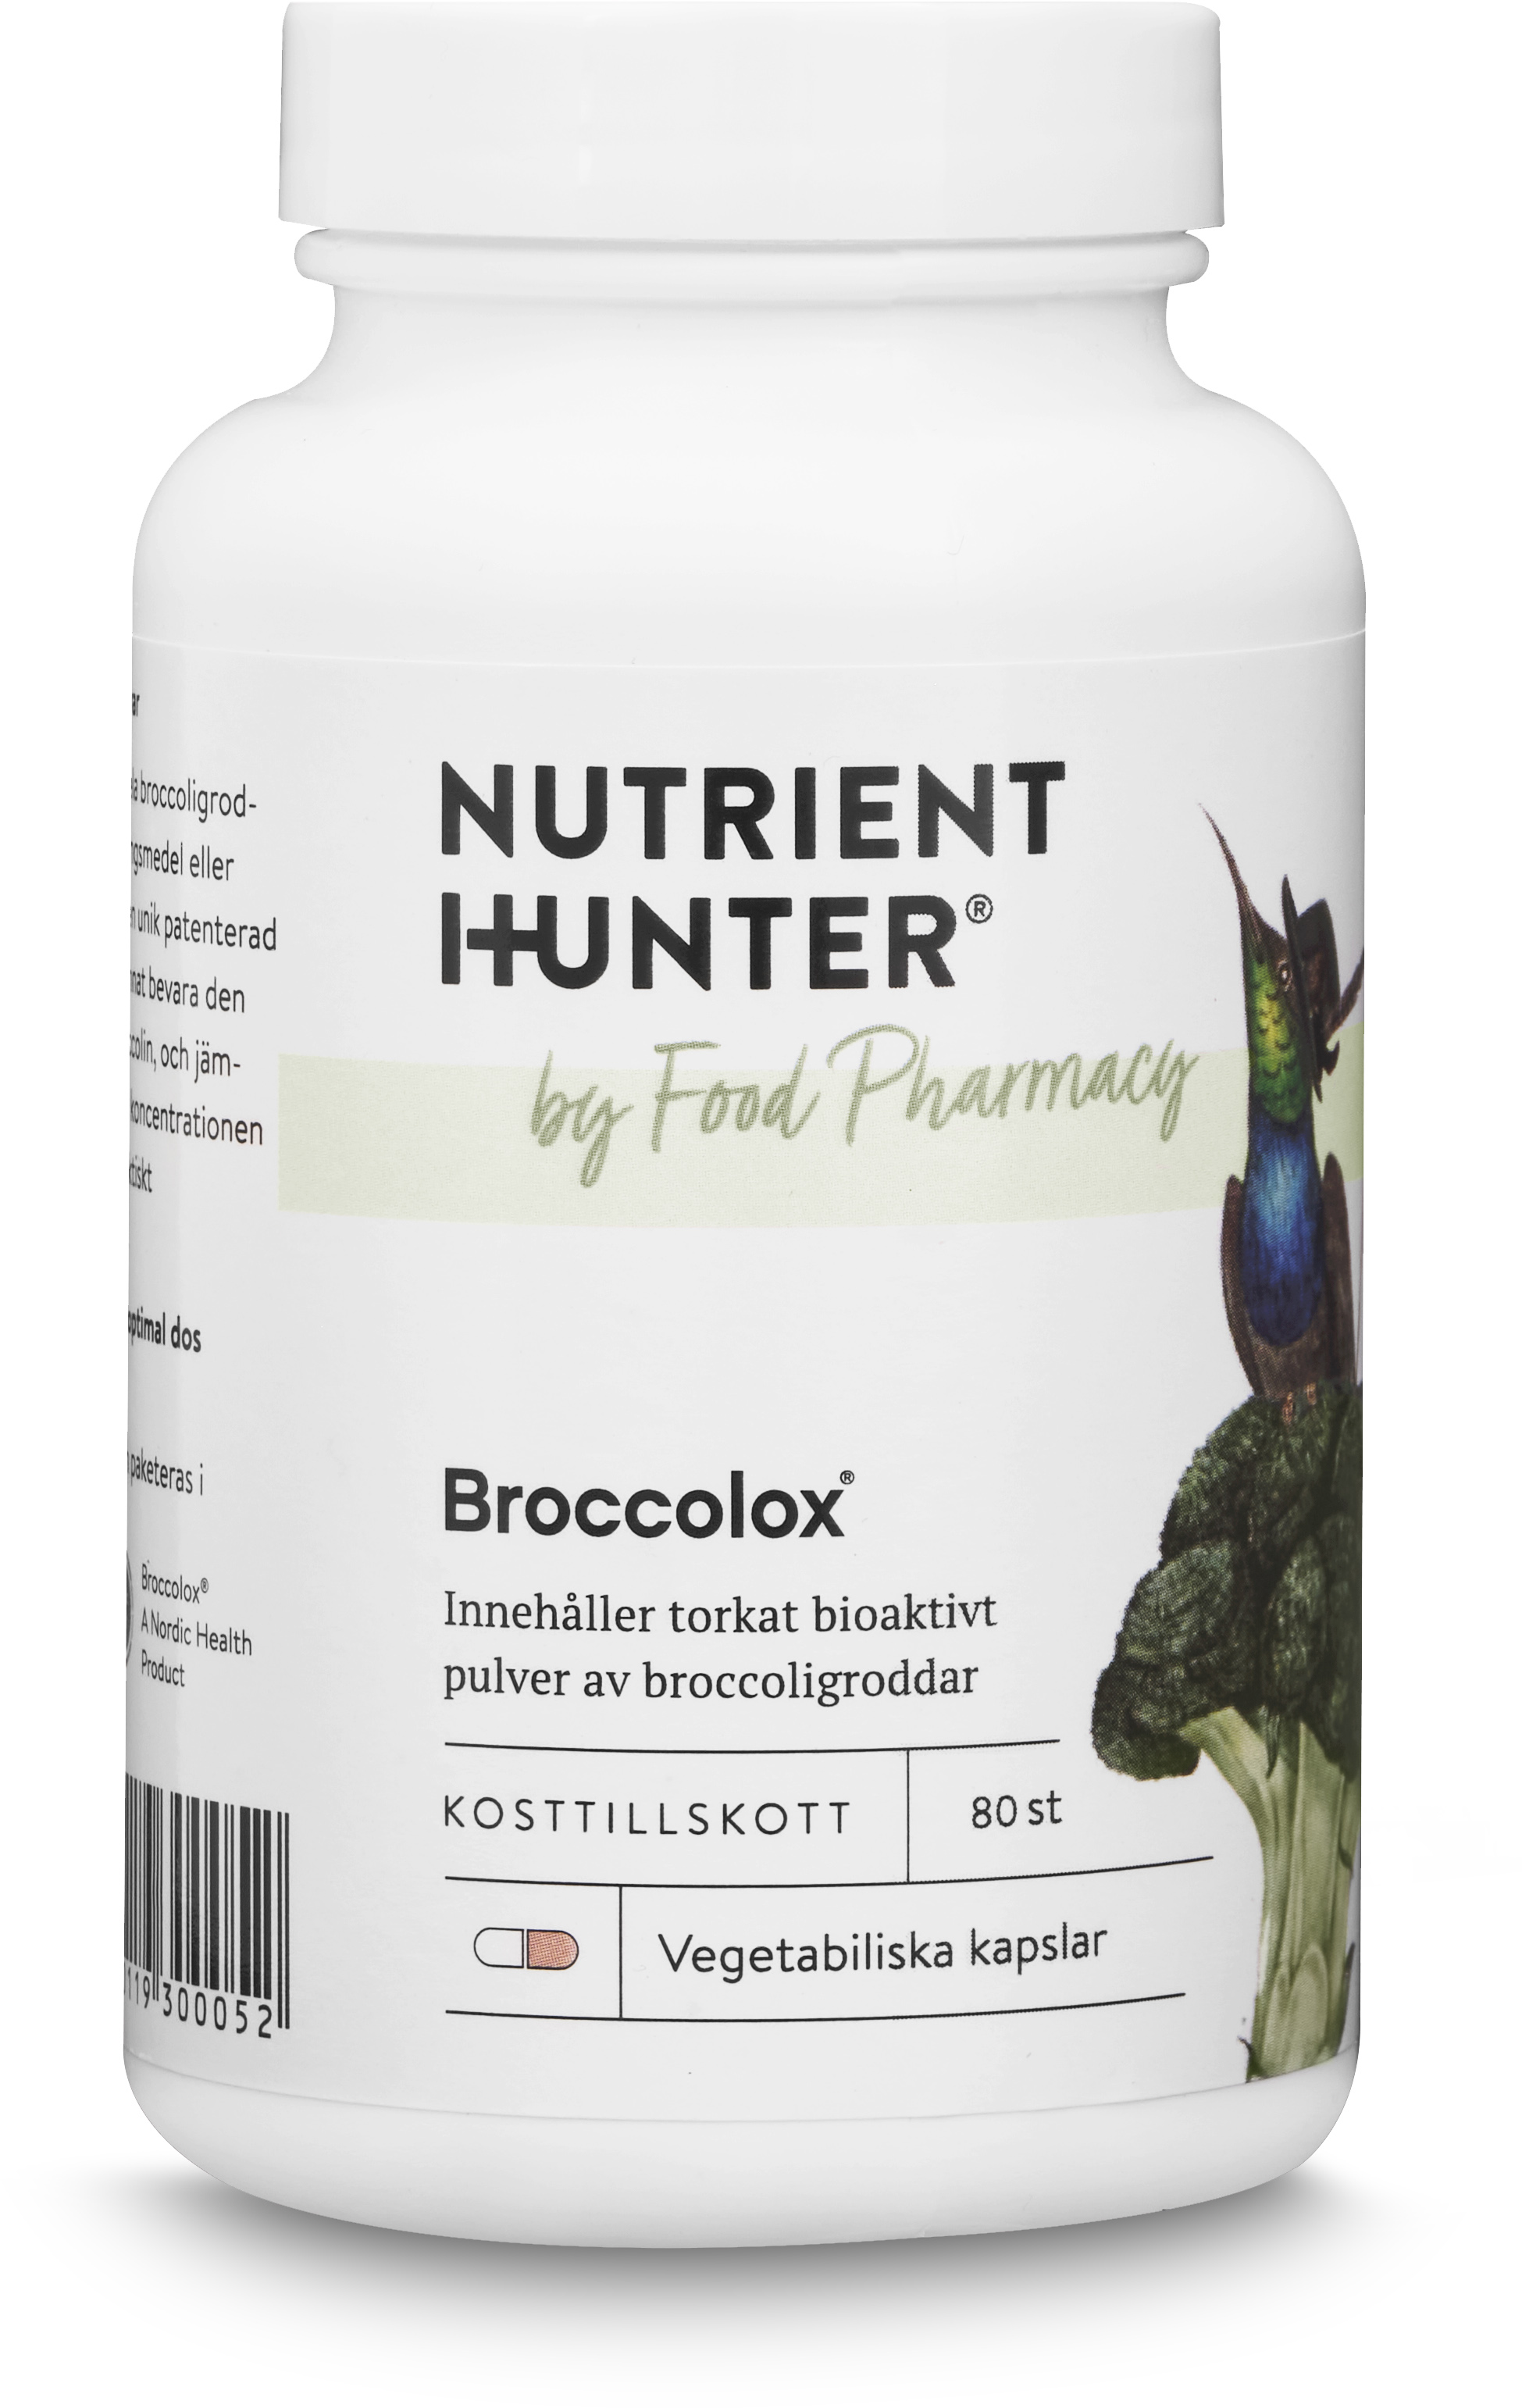 NUTRIENT HUNTER by Food Pharmacy Broccolox 80 kapslar